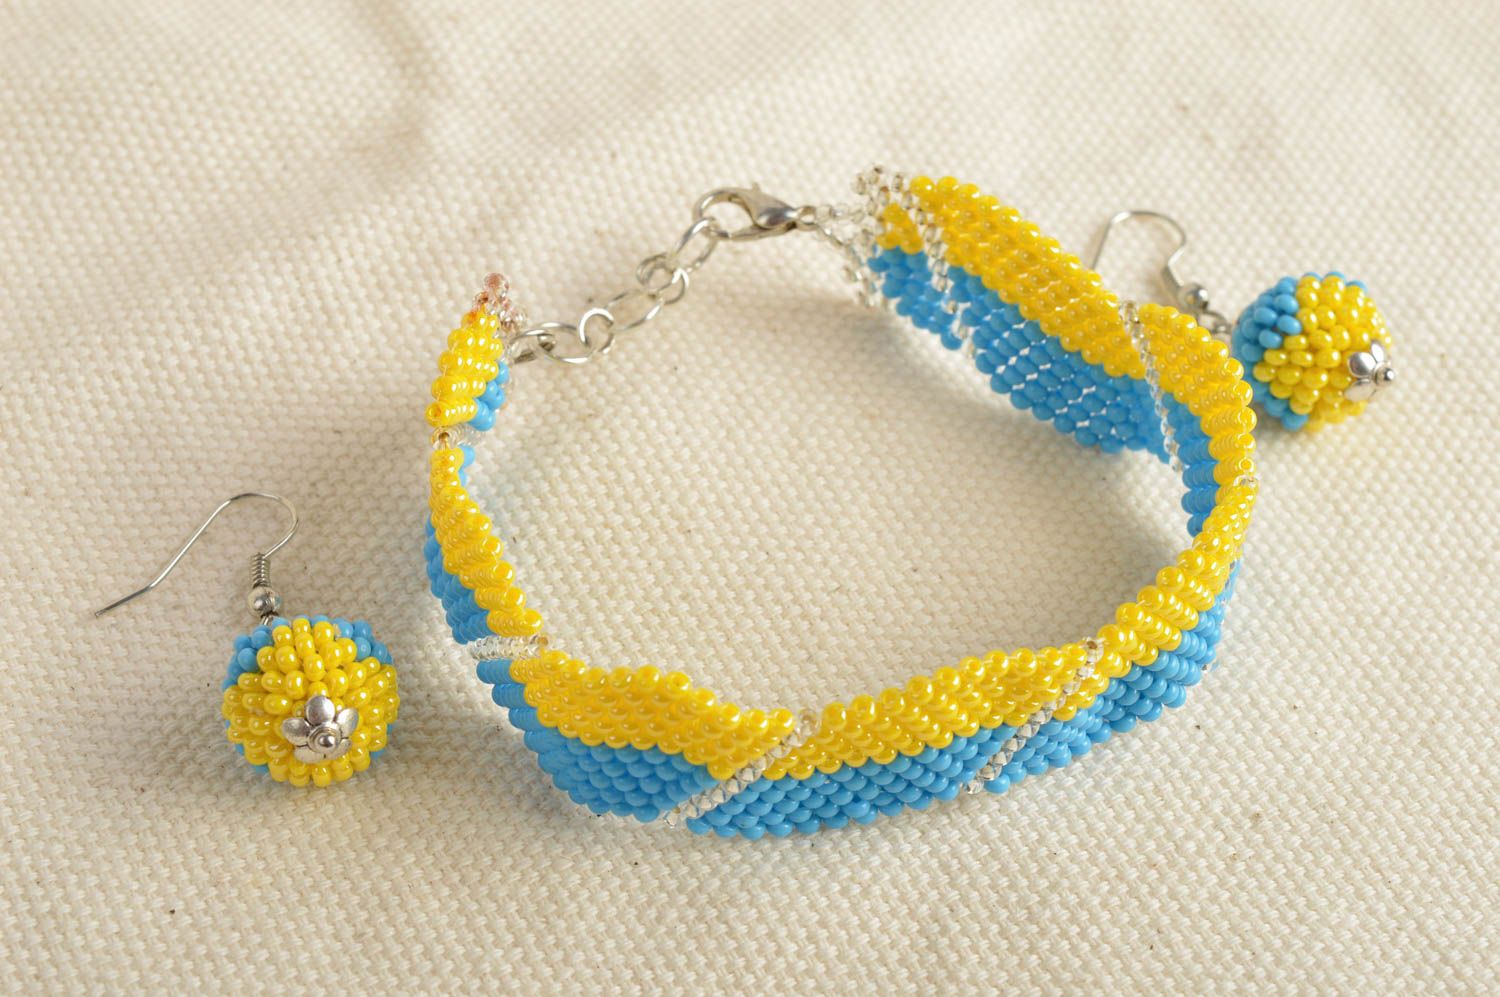 Handmade yellow and blue beaded jewelry set 2 items wrist bracelet and earrings photo 1